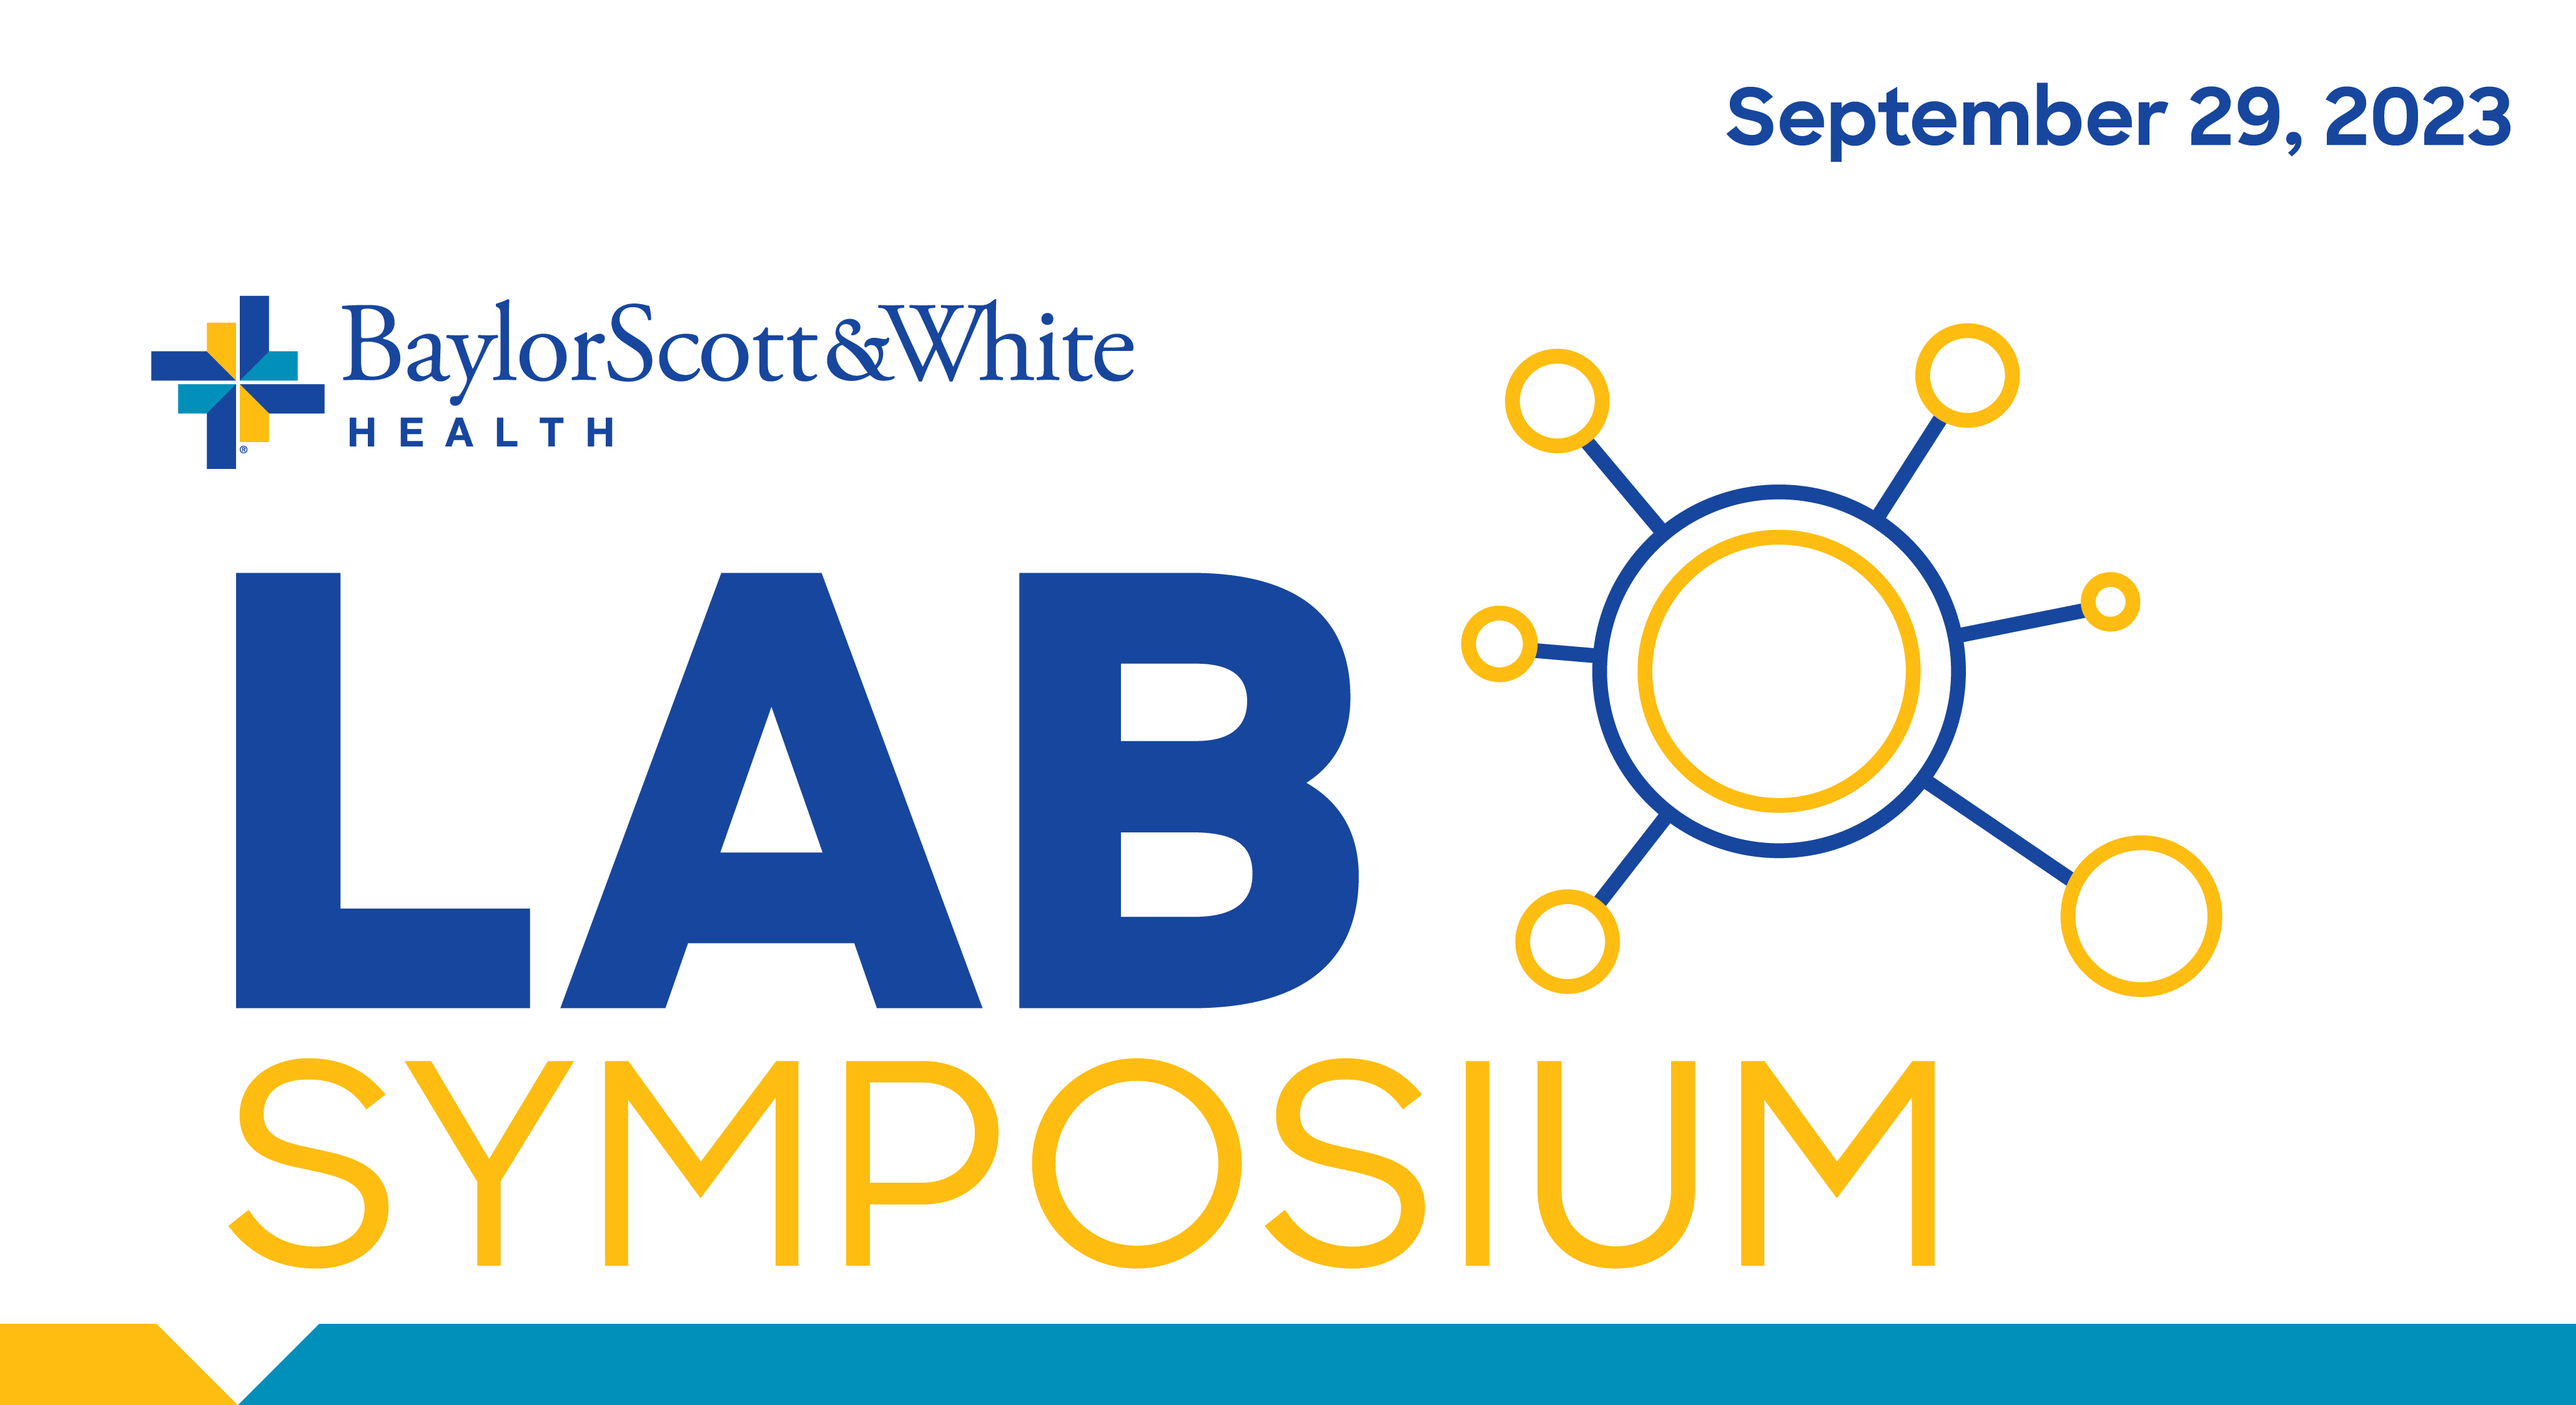 Baylor Scott & White Lab Symposium